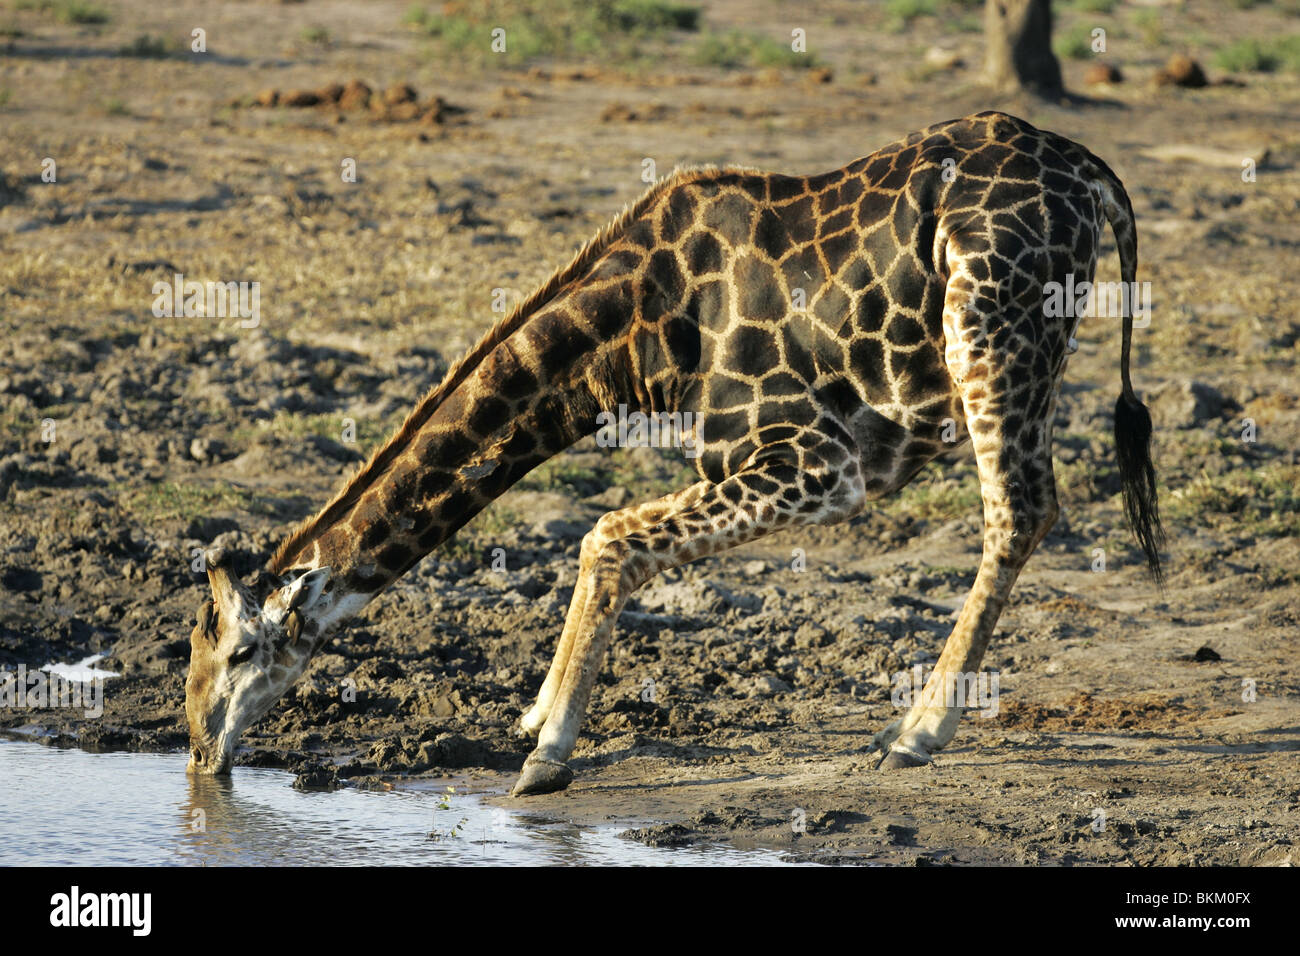 Giraffe drinking, south africa, Kruger Park Stock Photo